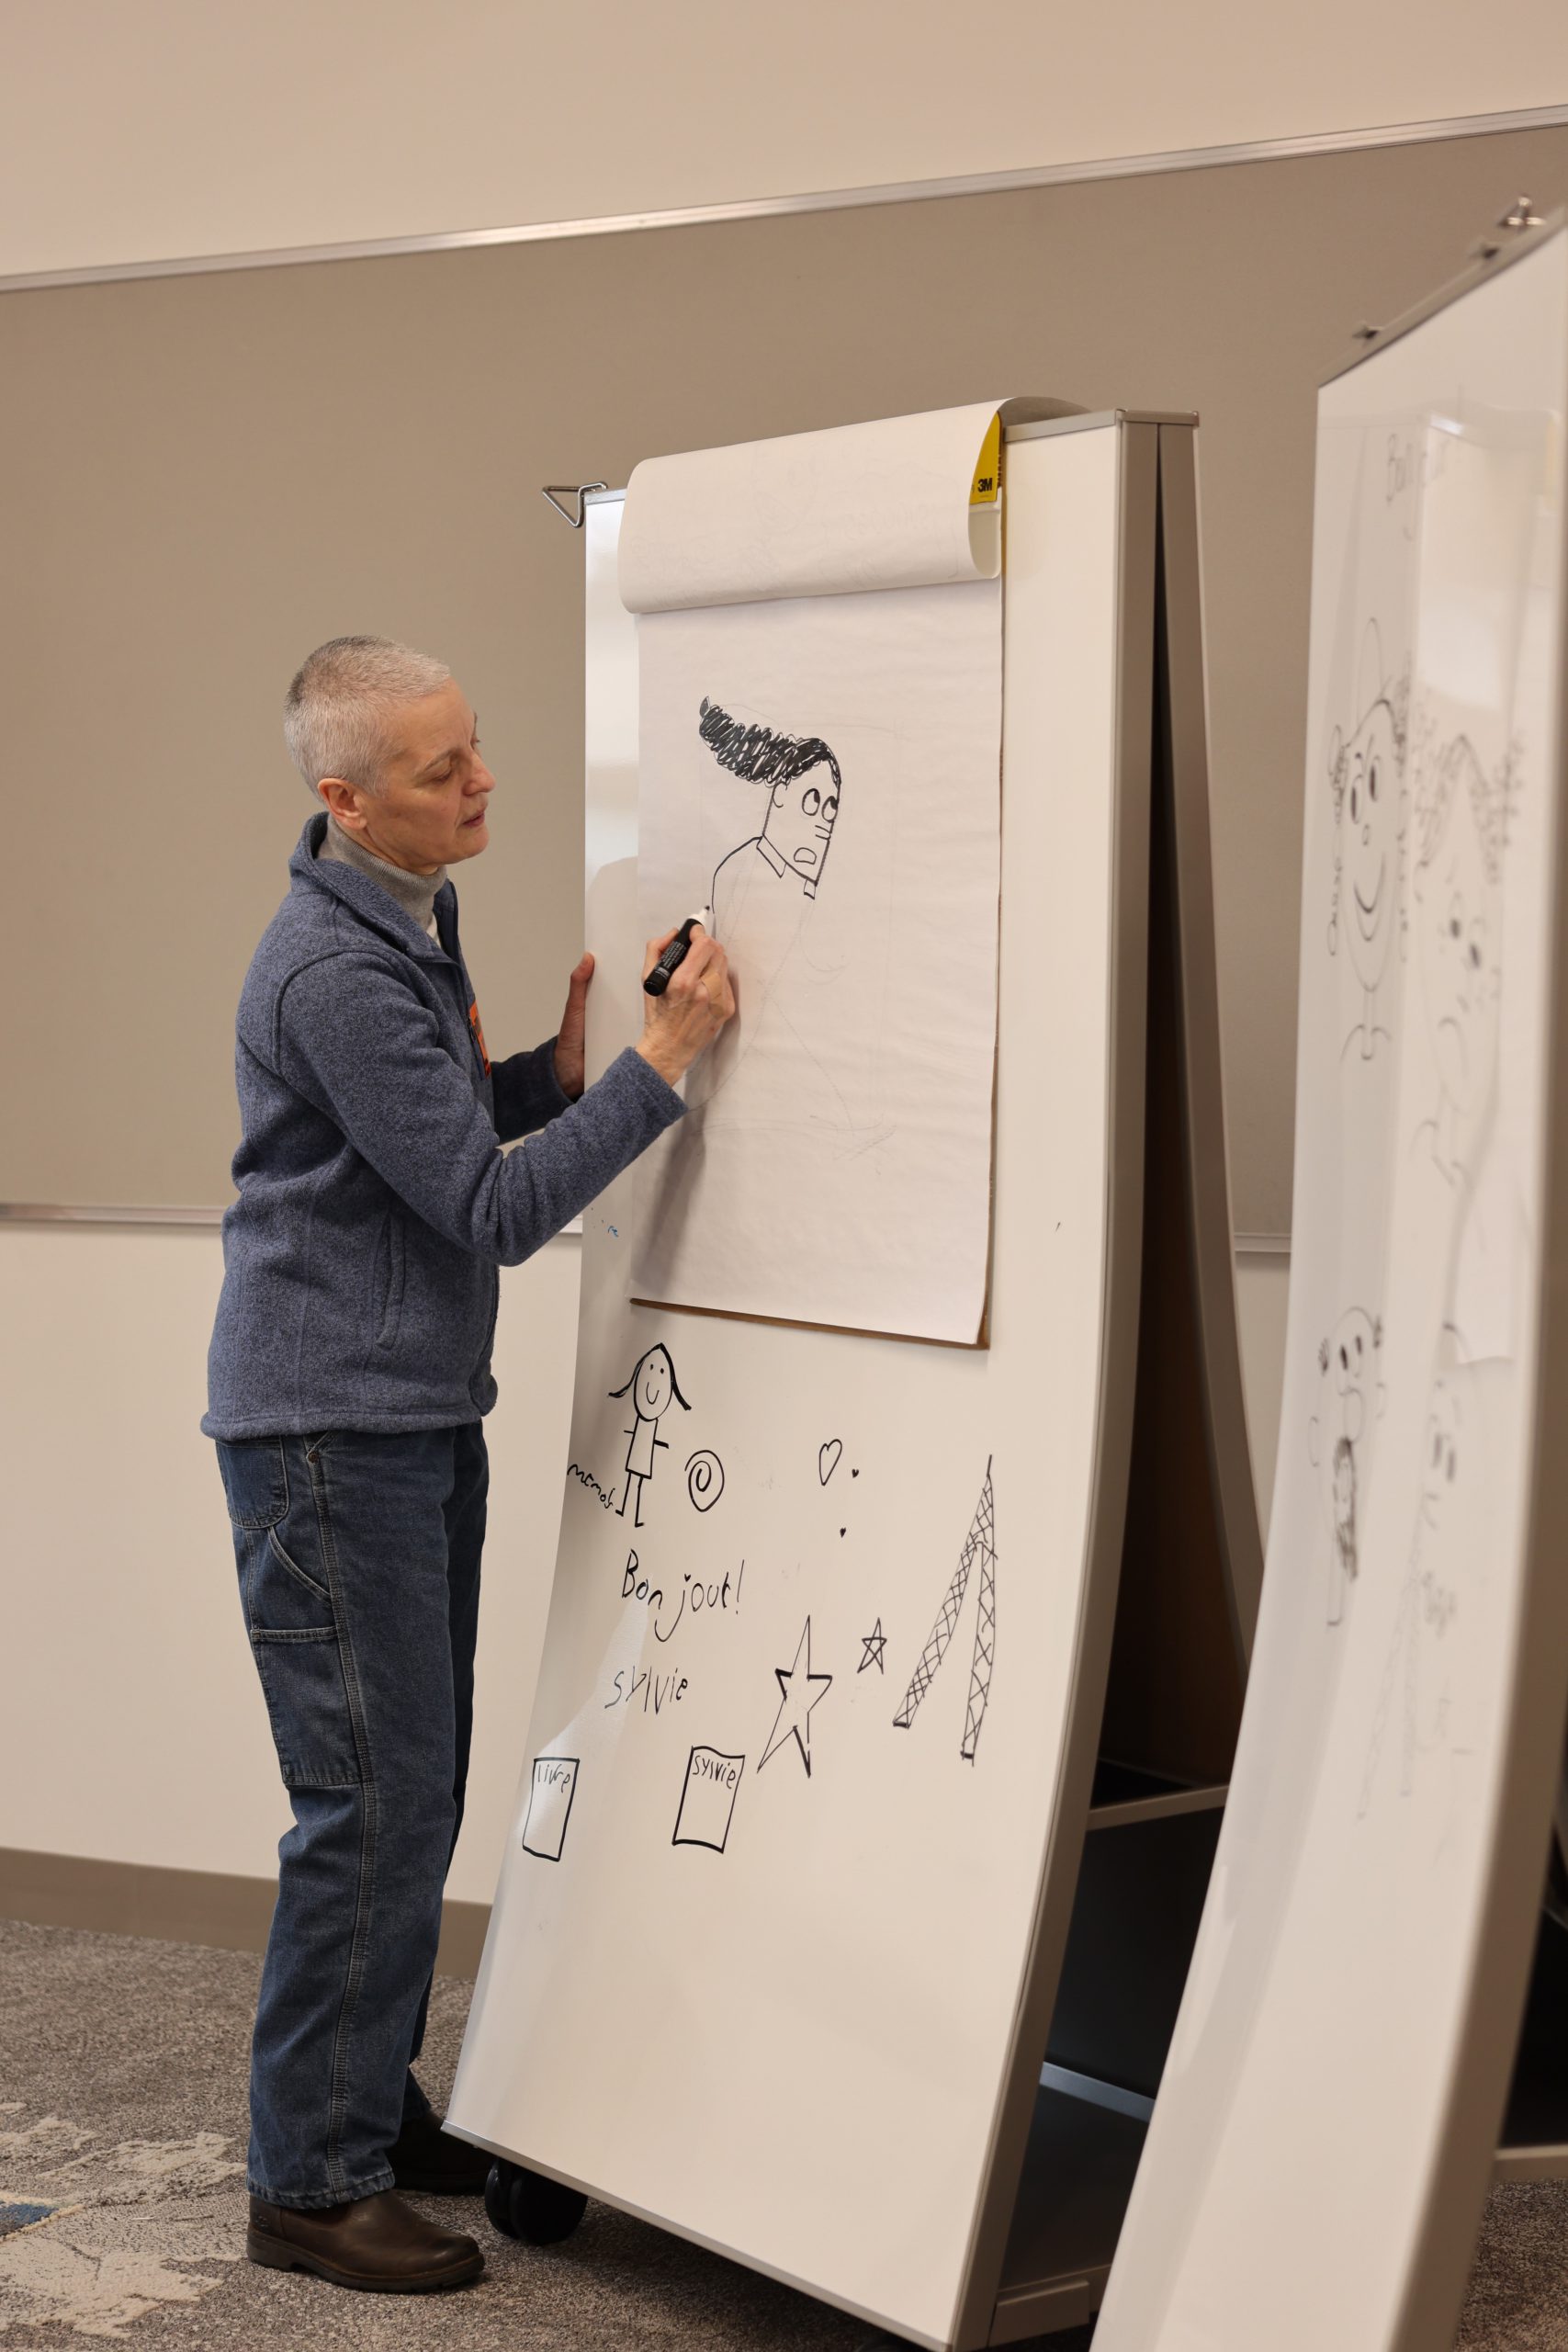 Sylvie Kantorovitz demonstrates elements of illustration on a white board.